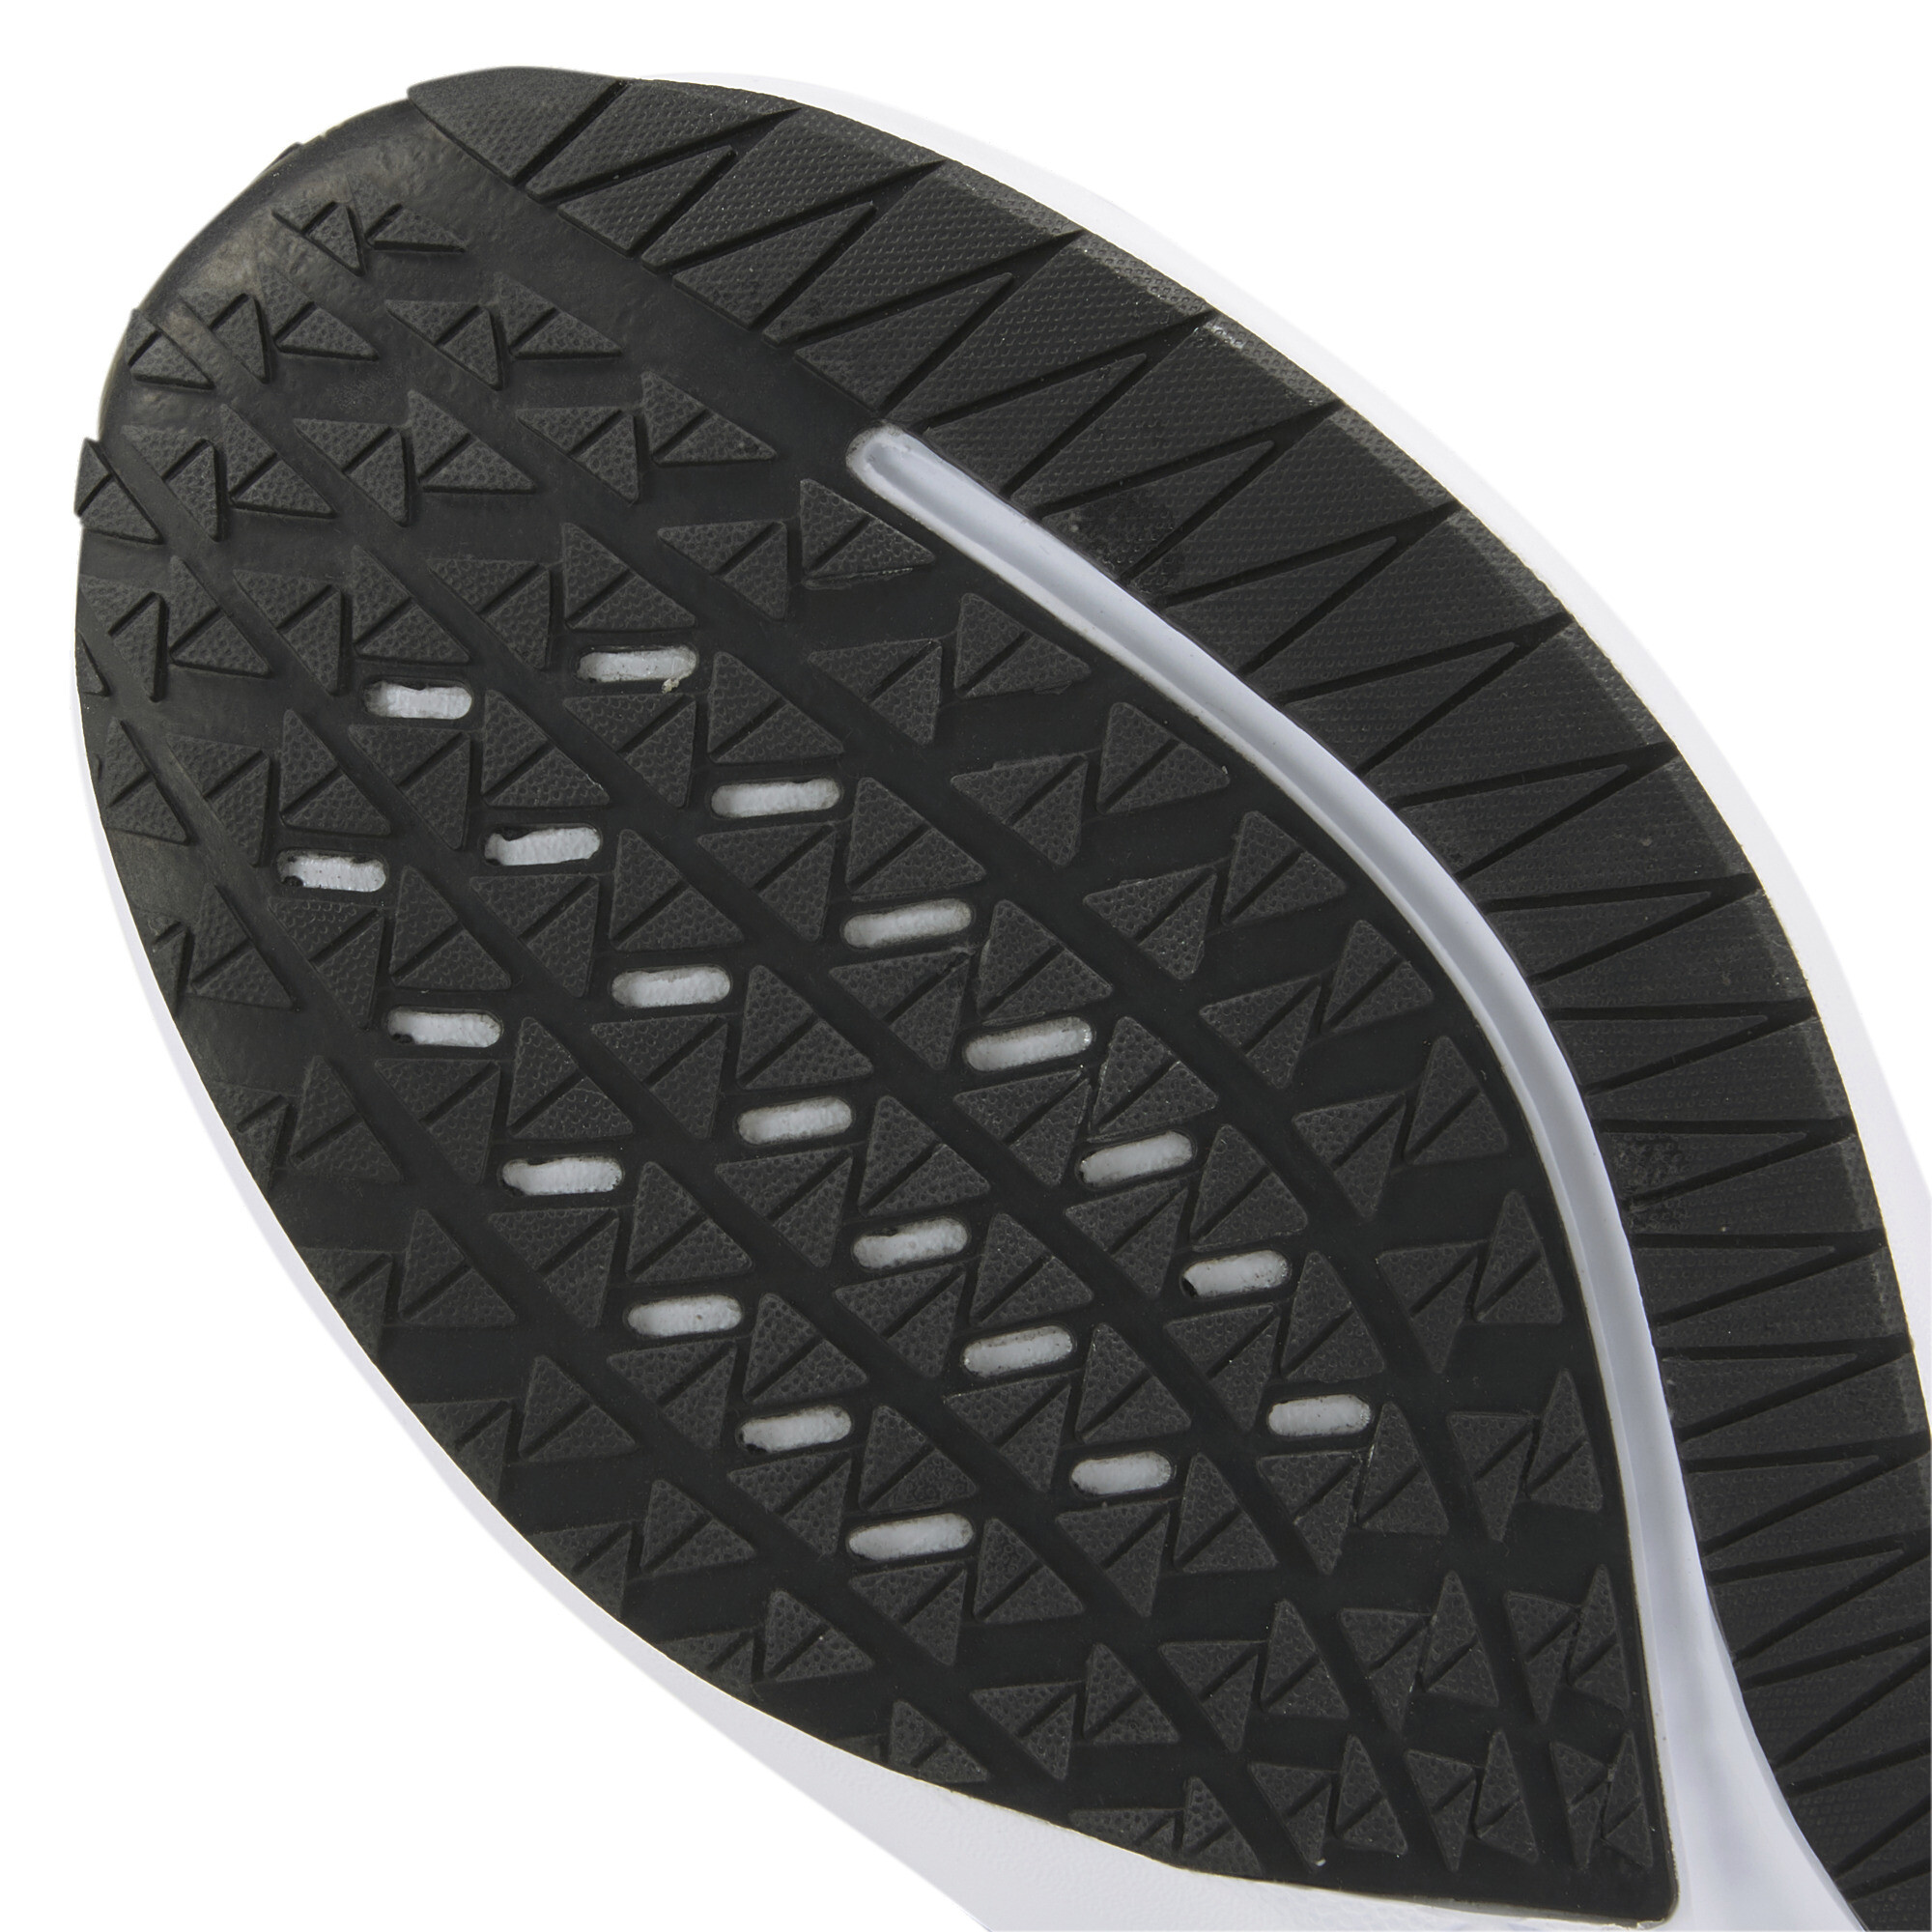 Puma Aviator Pro Foam Sky Running Shoes, Black, Size 47, Shoes